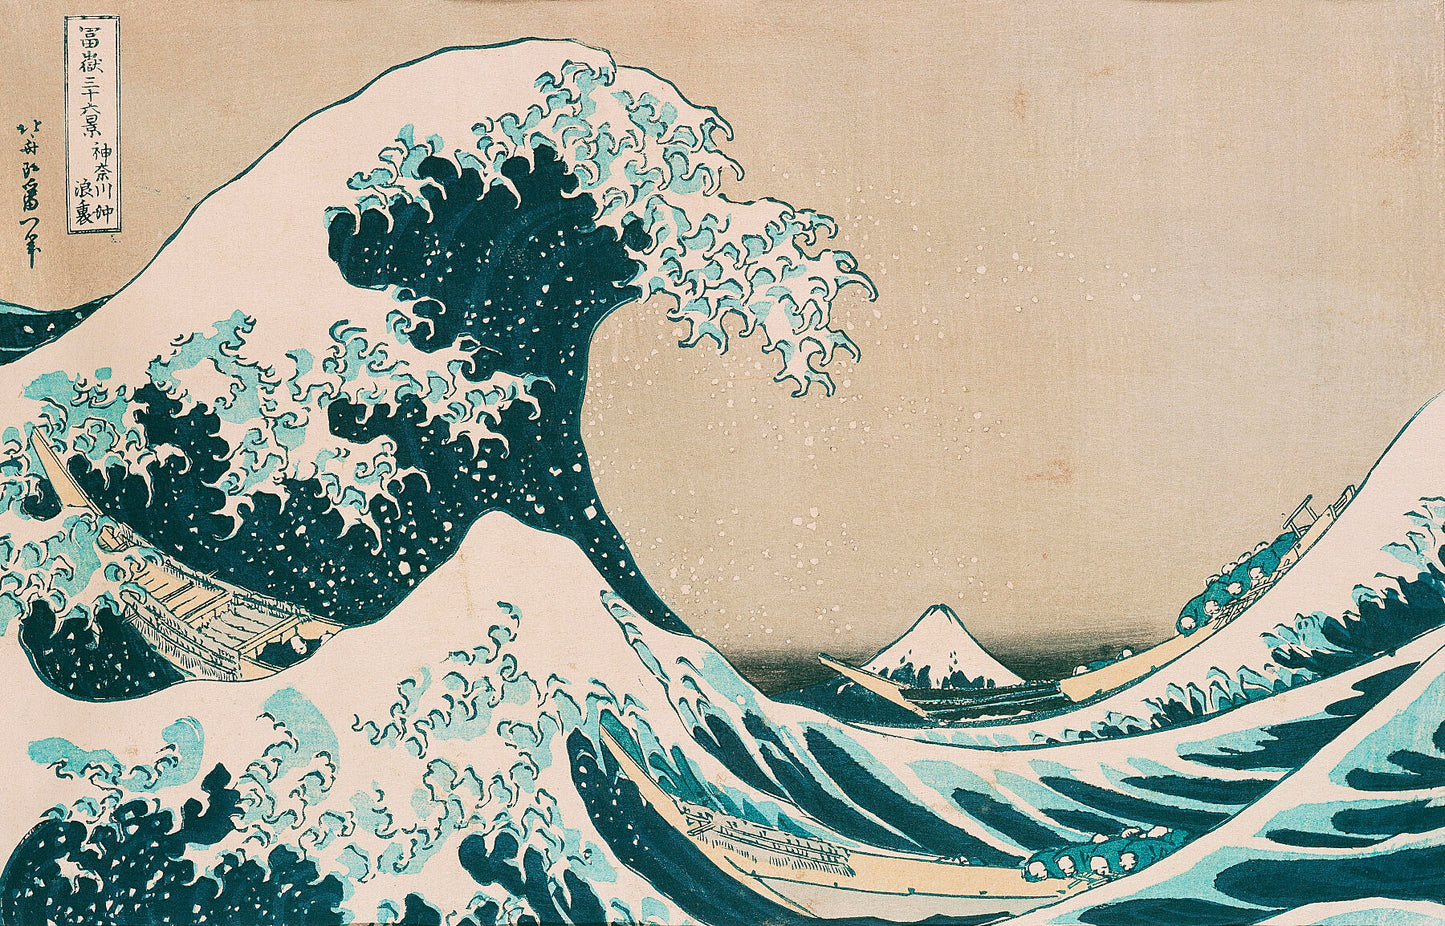 Katsushika Hokusai, Under the Wave off Kanagawa or The Great Wave from the series 36 Views of MtFuji, 1830-31 - BALowned, Hokusai, Katsushika (1760-1849), Masters, Painting by  Bridgeman Editions